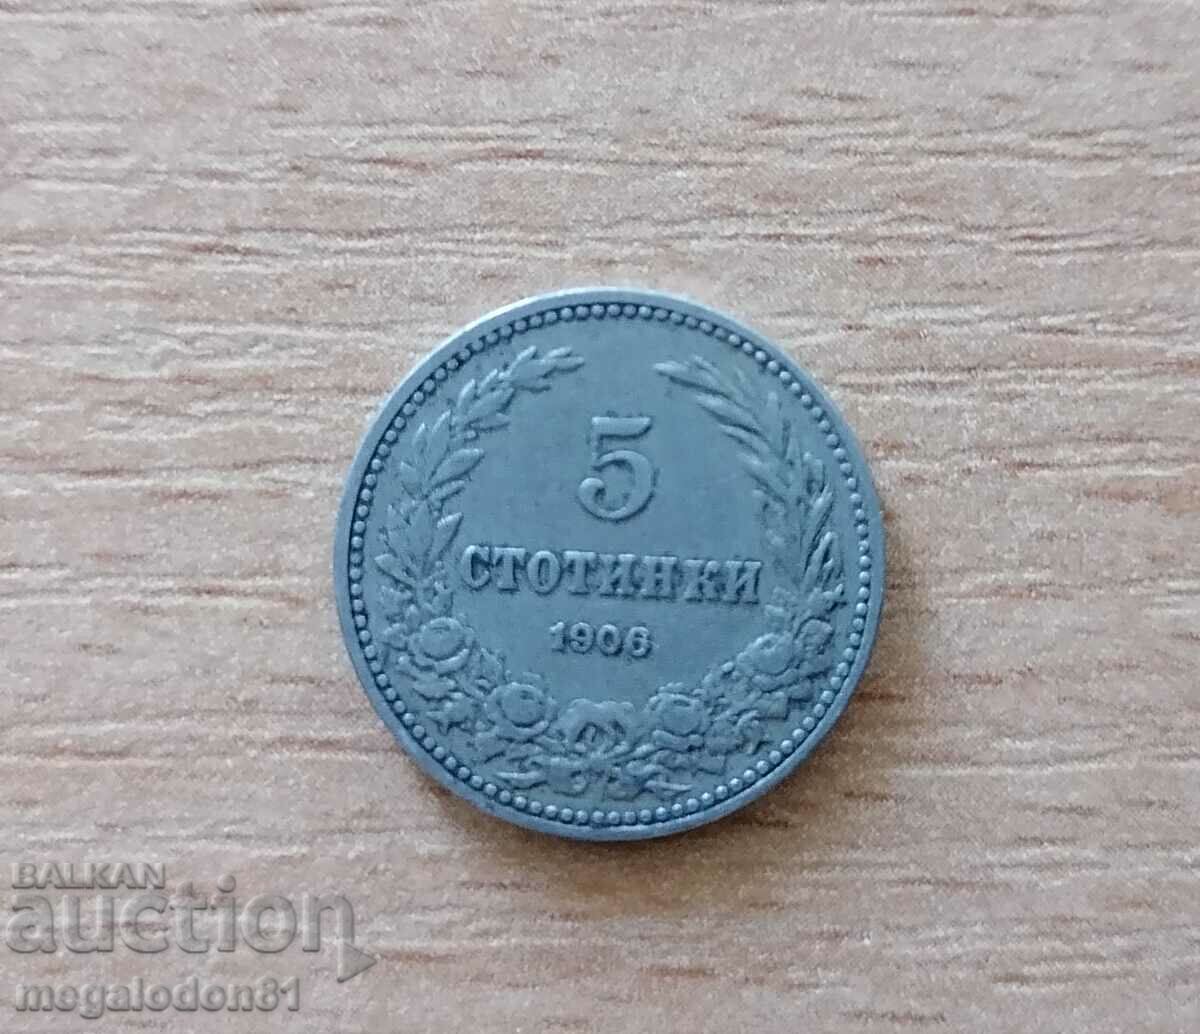 Bulgaria - 5 cents 1906